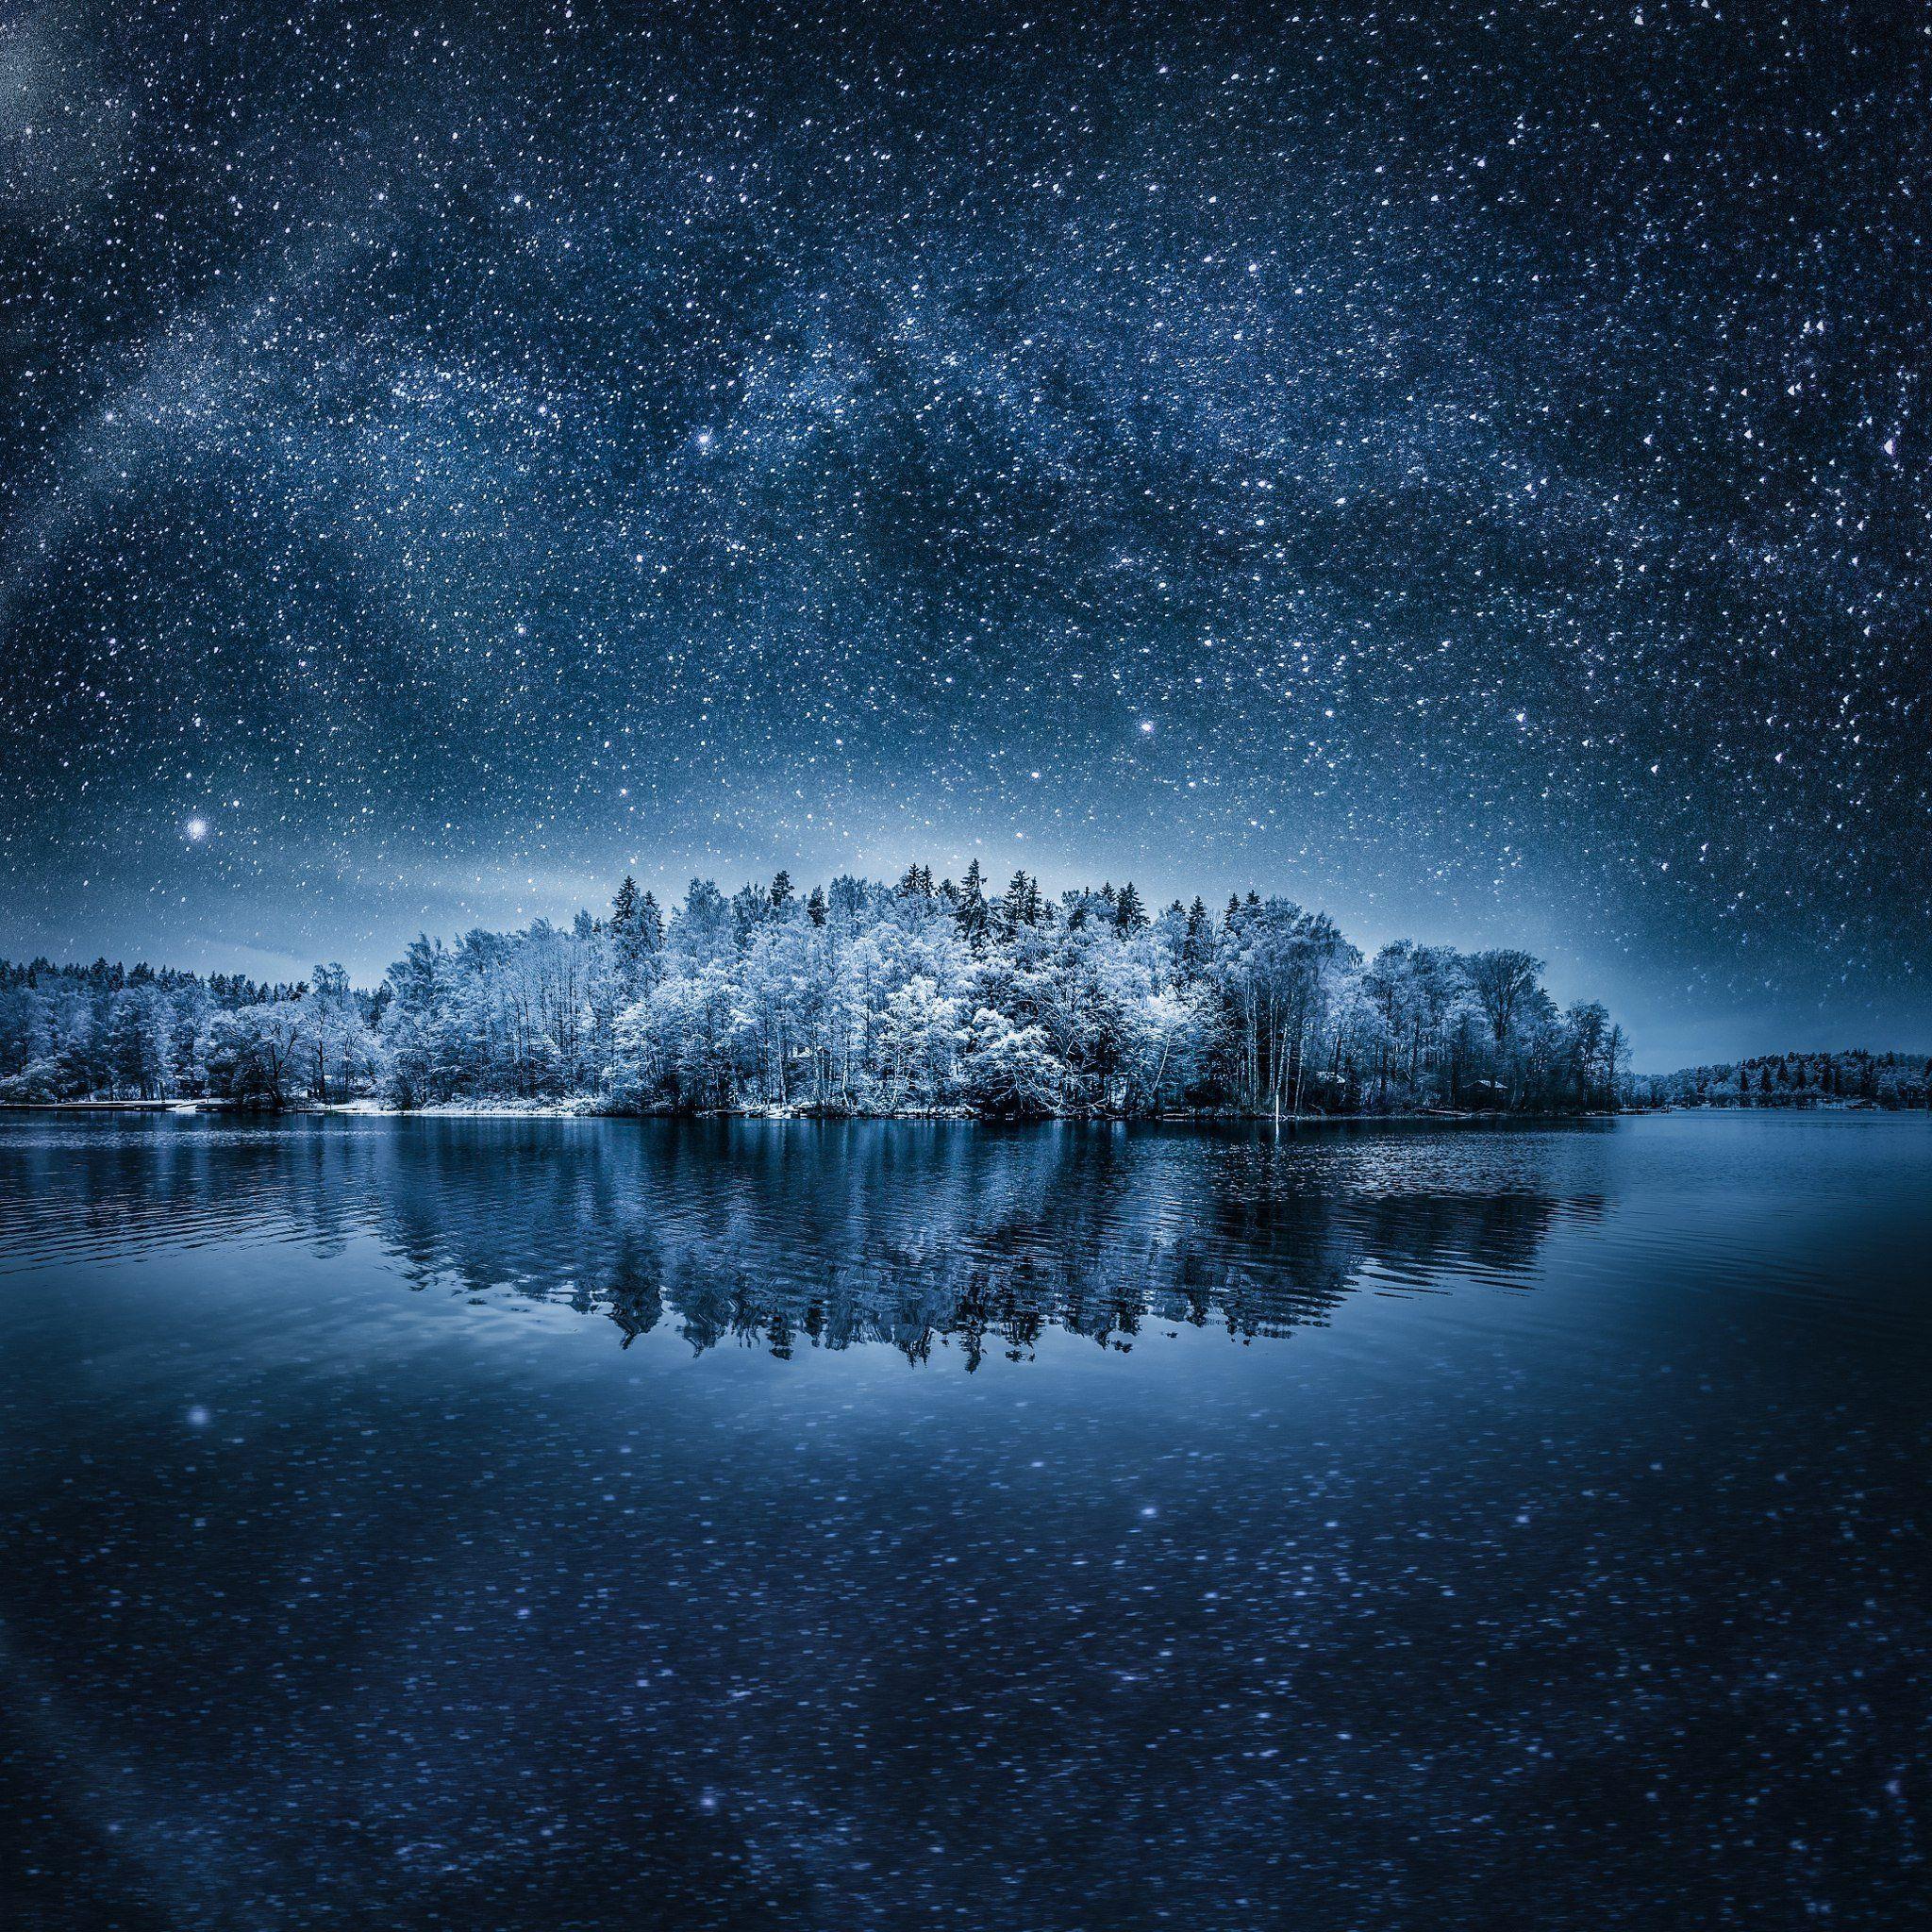 Winter Night Sky Hd Wallpapers - Top Free Winter Night Sky Hd